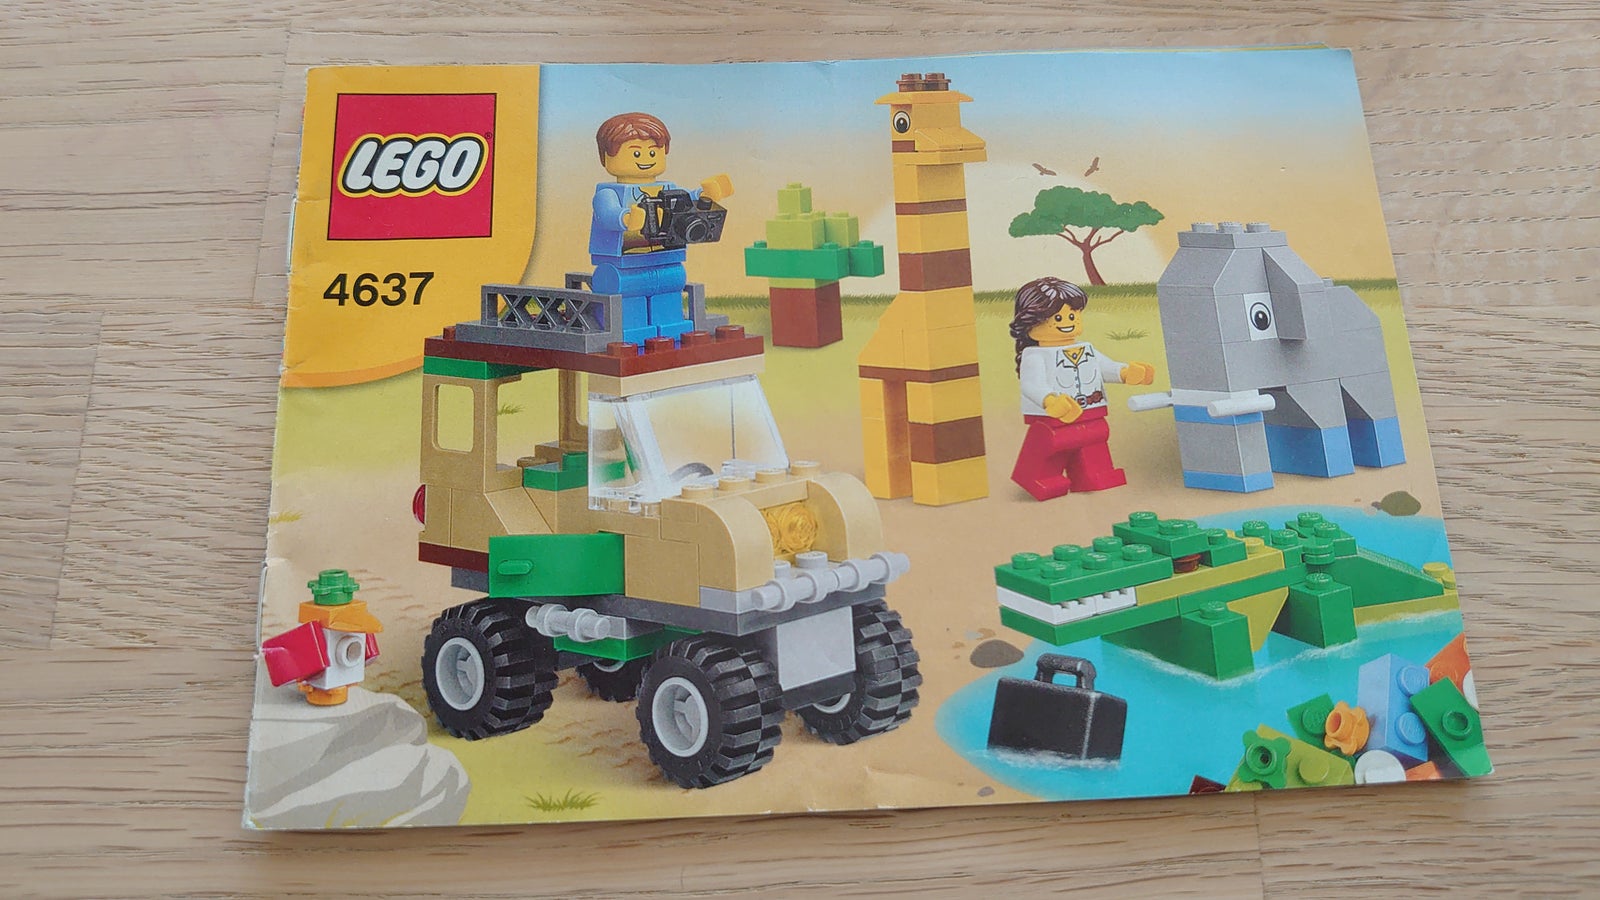 Lego 4637 Safari Building Set